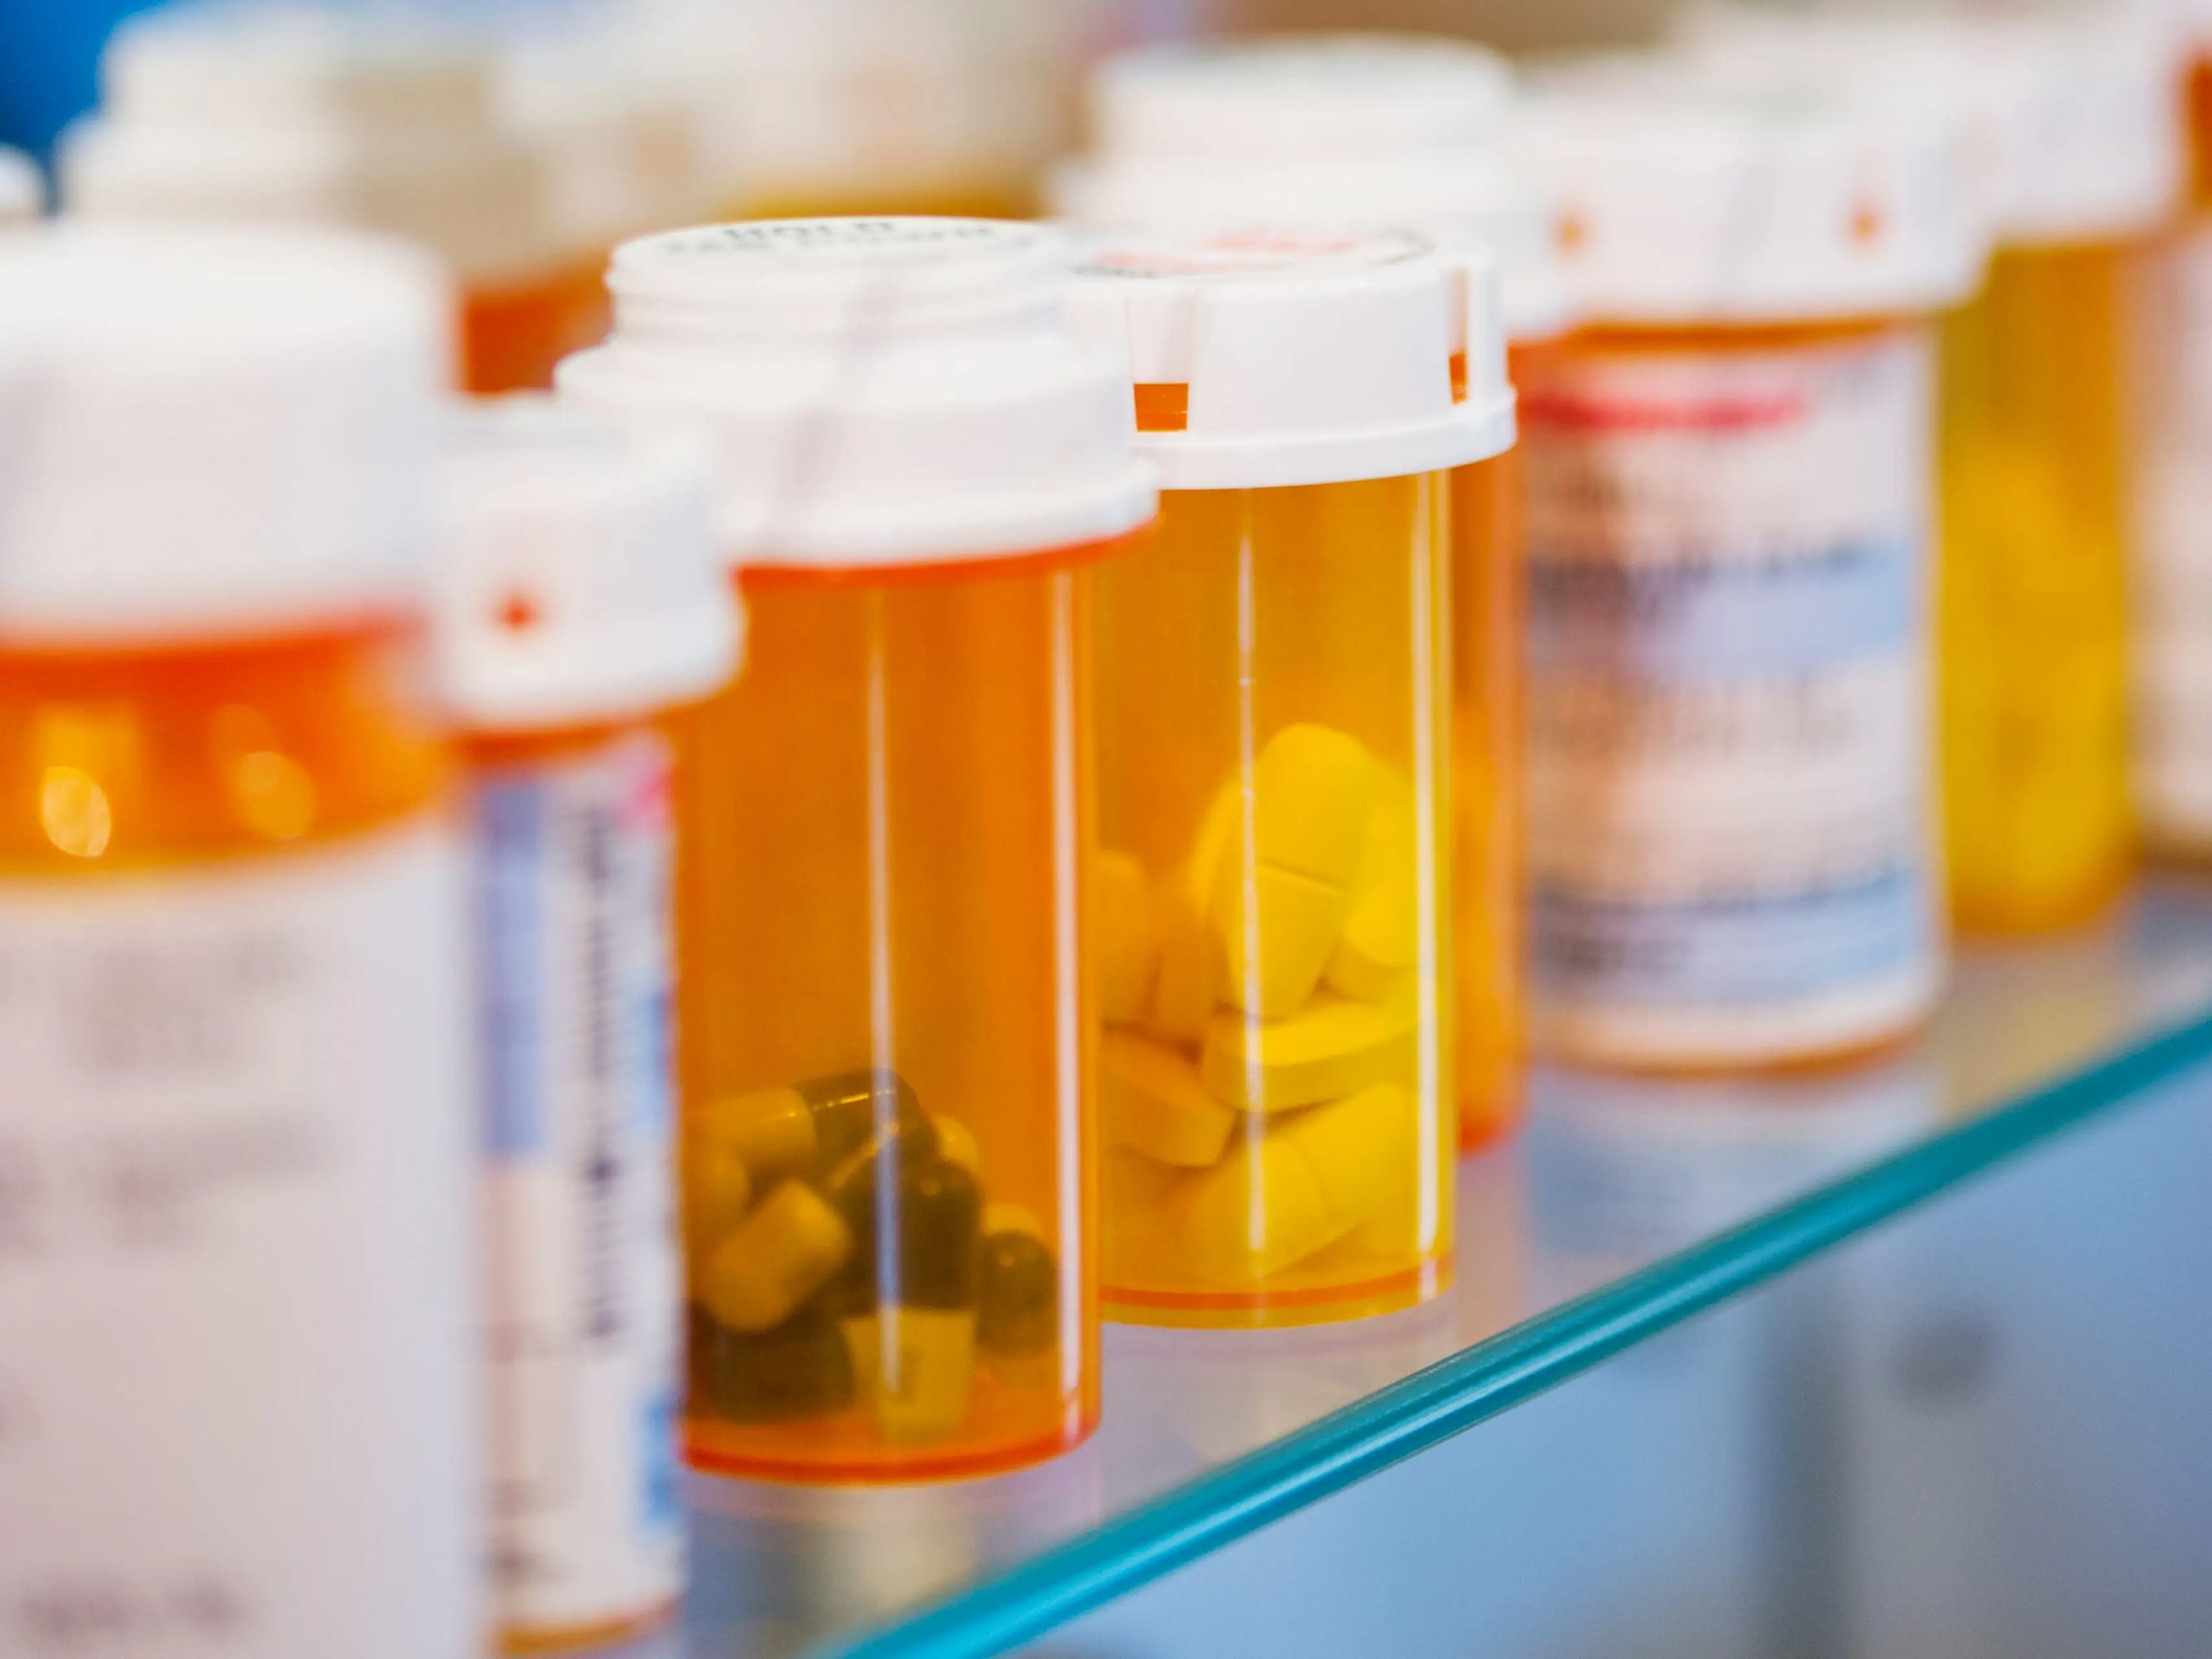 Pill bottles on a shelf in a medicine cabinet